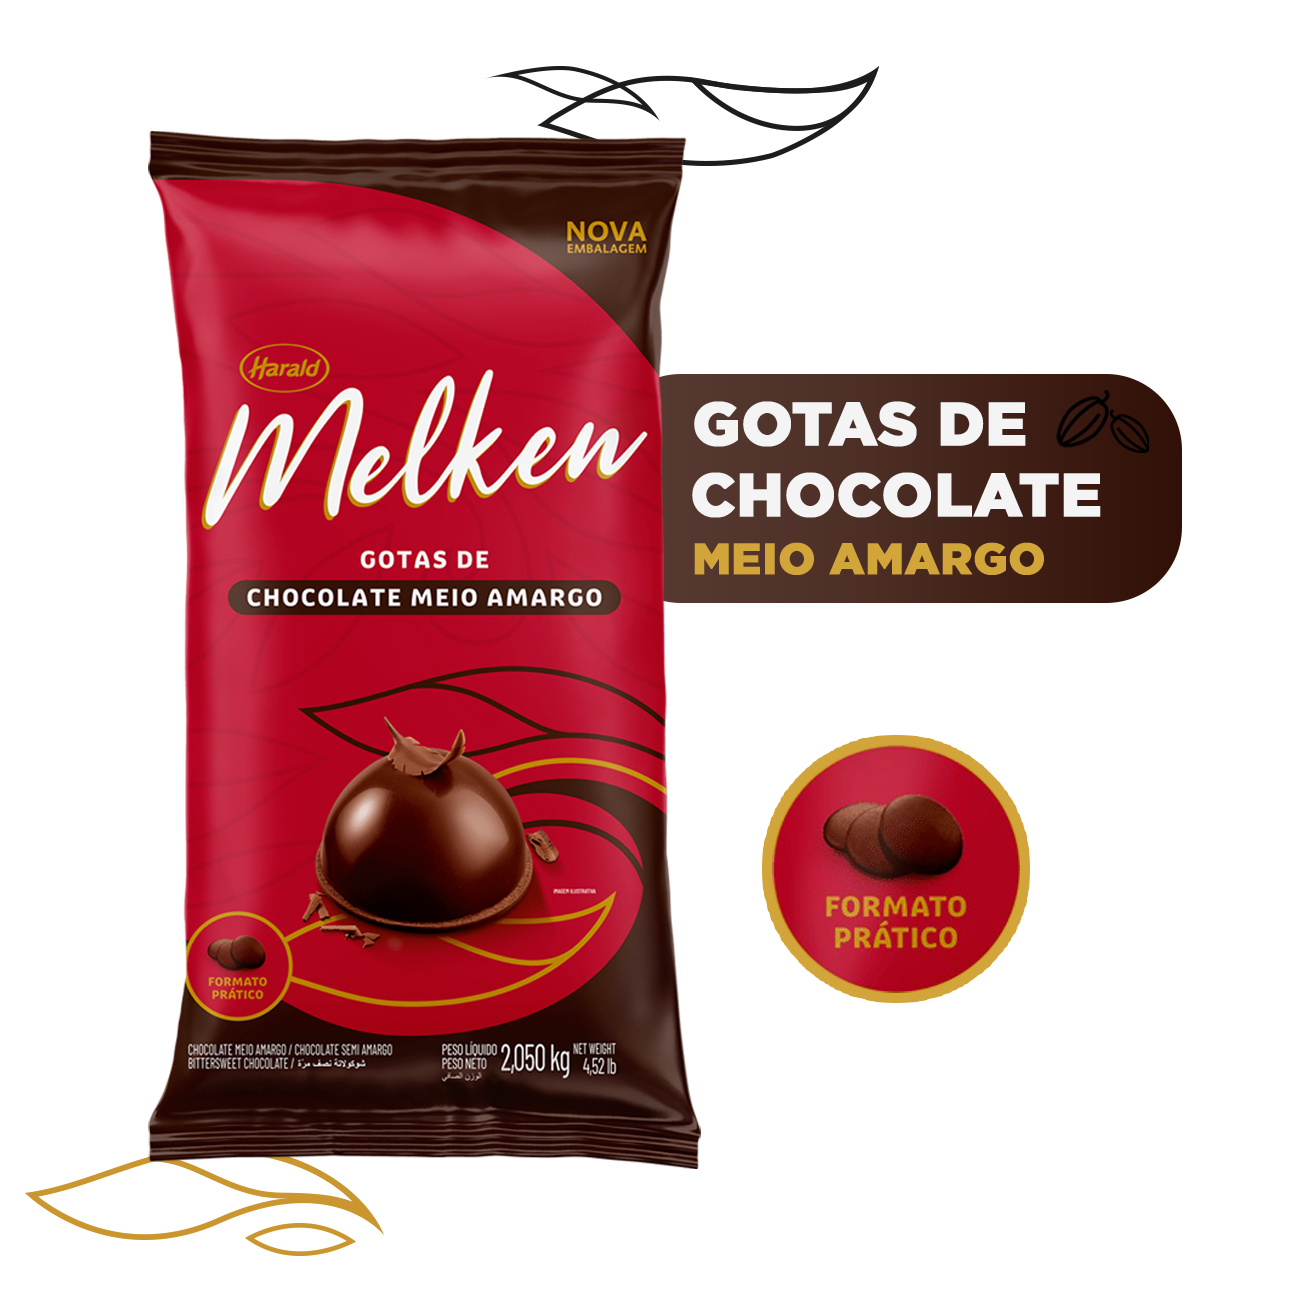 Chocolate Meio Amargo gotas Melken Harald 2,05kg